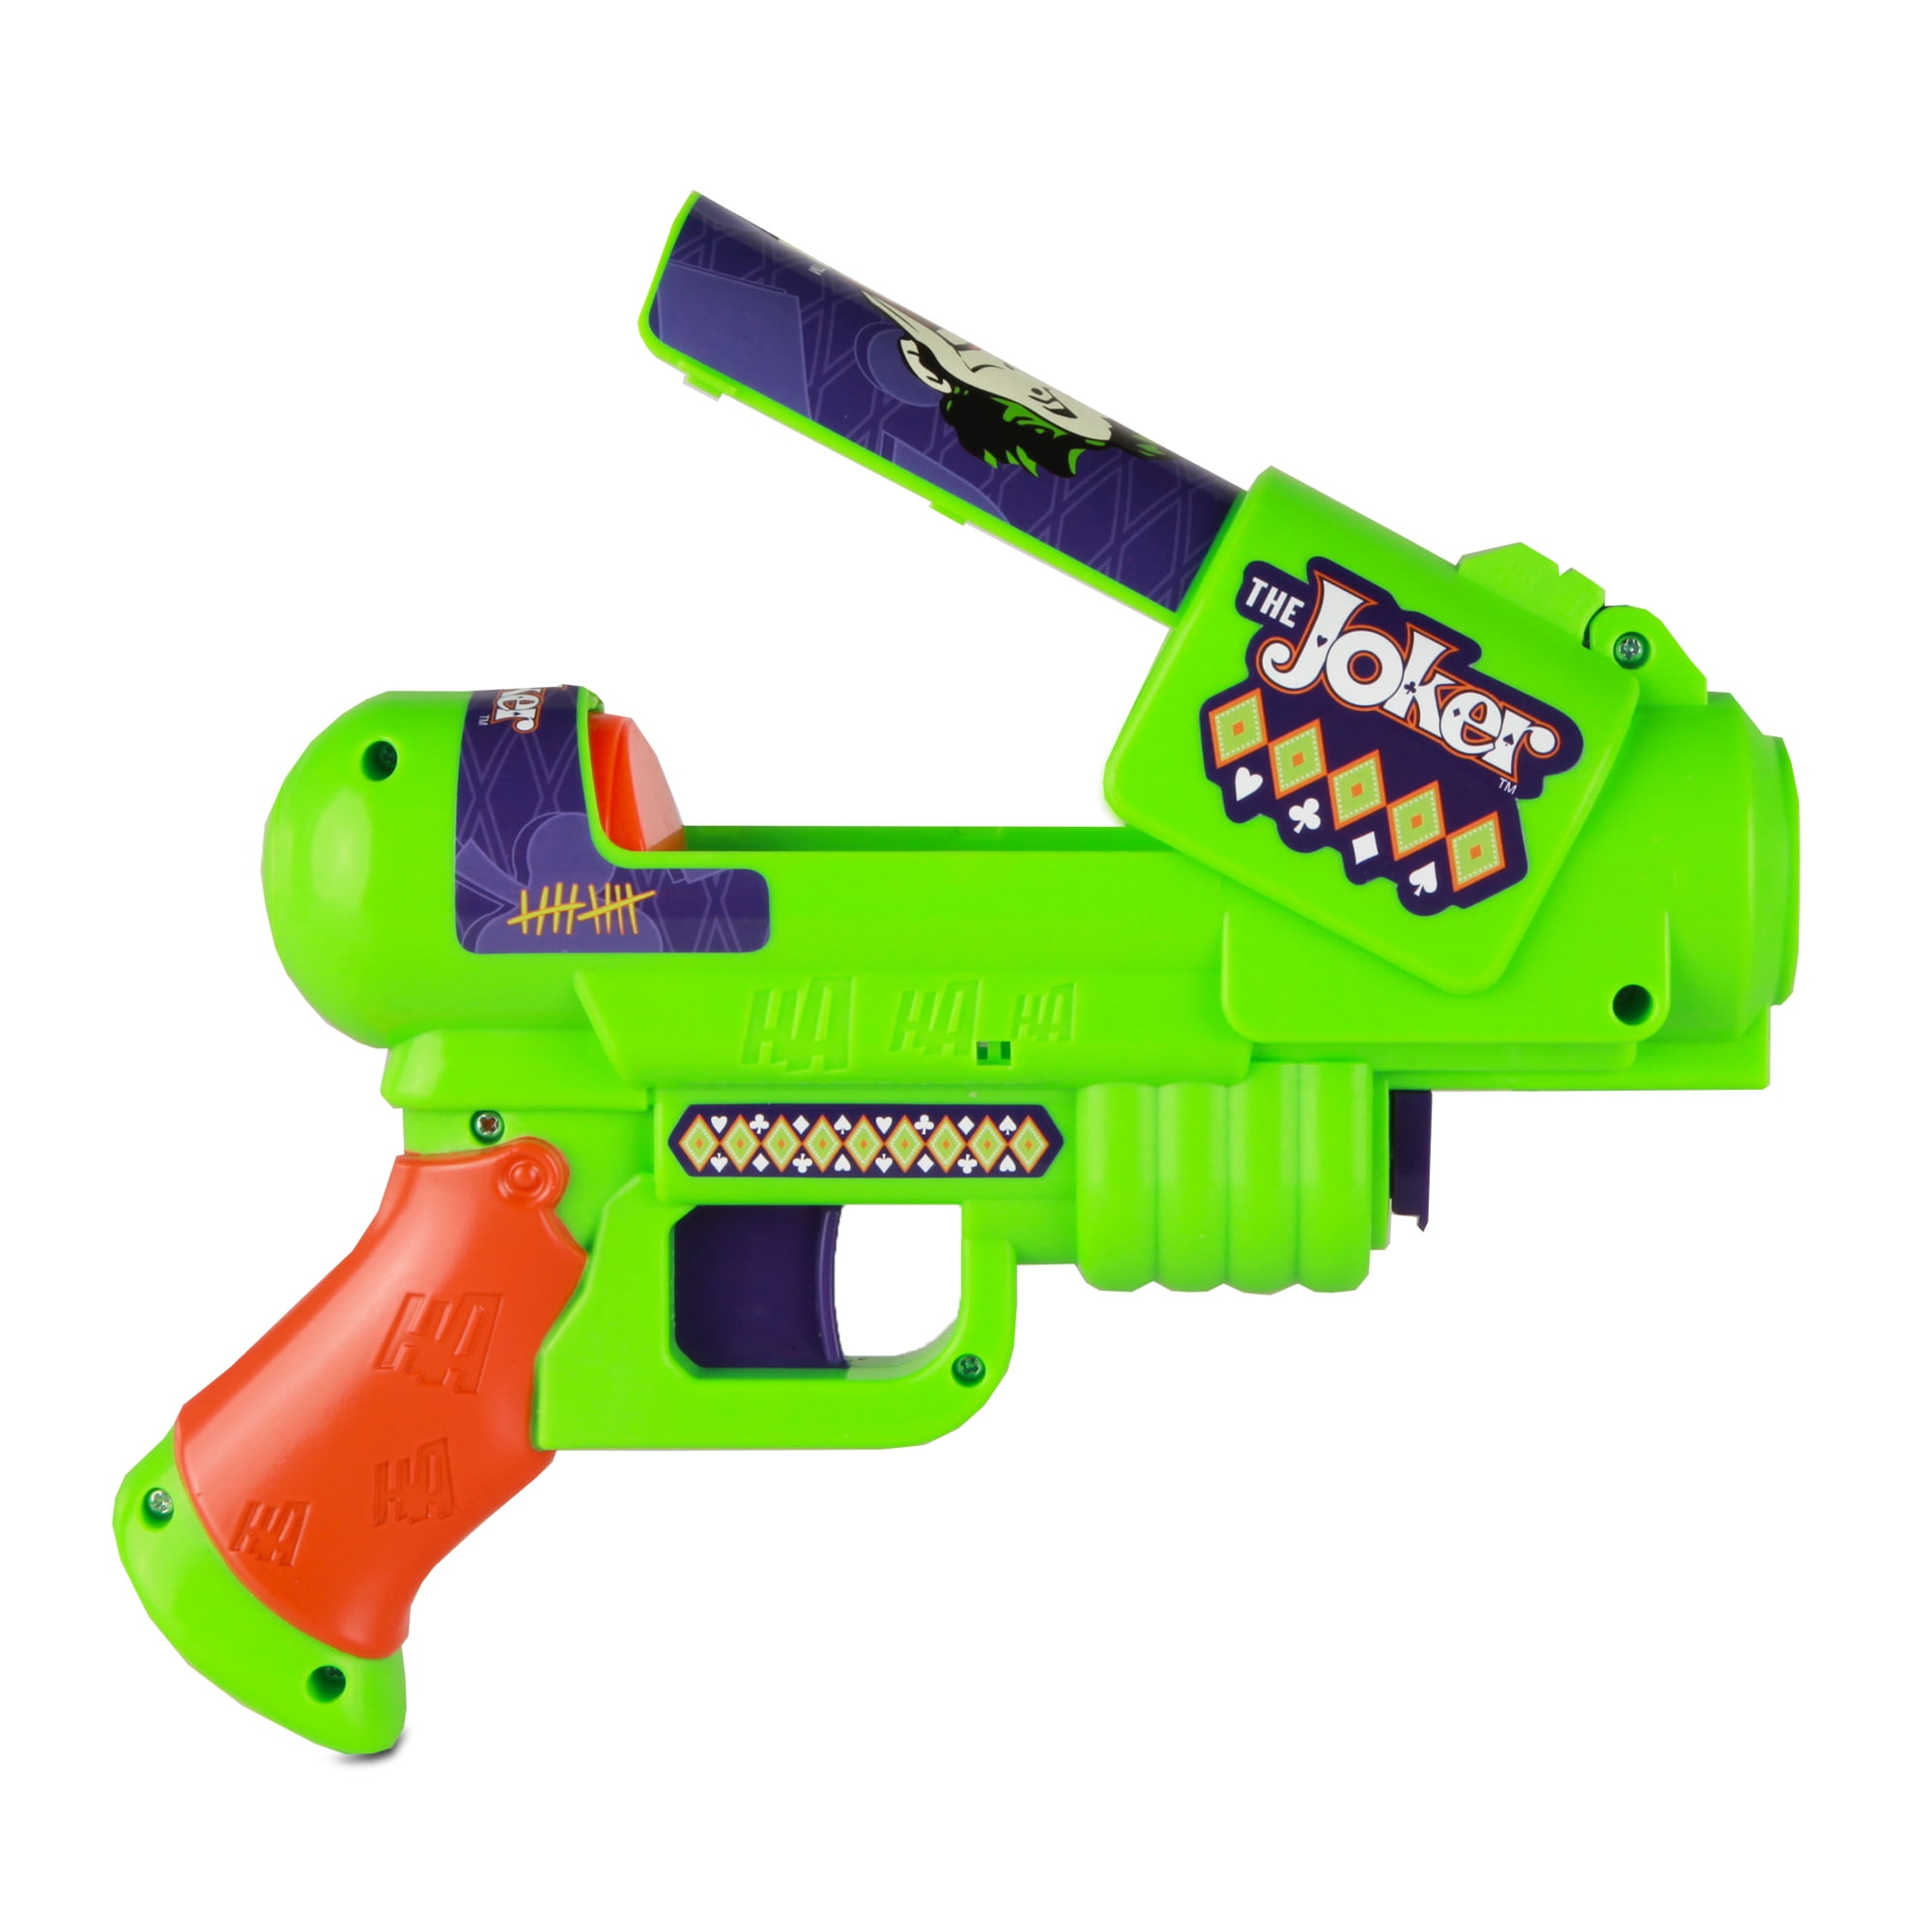 The Joker Inflatable Bang Joke Gun Toy Costume Accessory